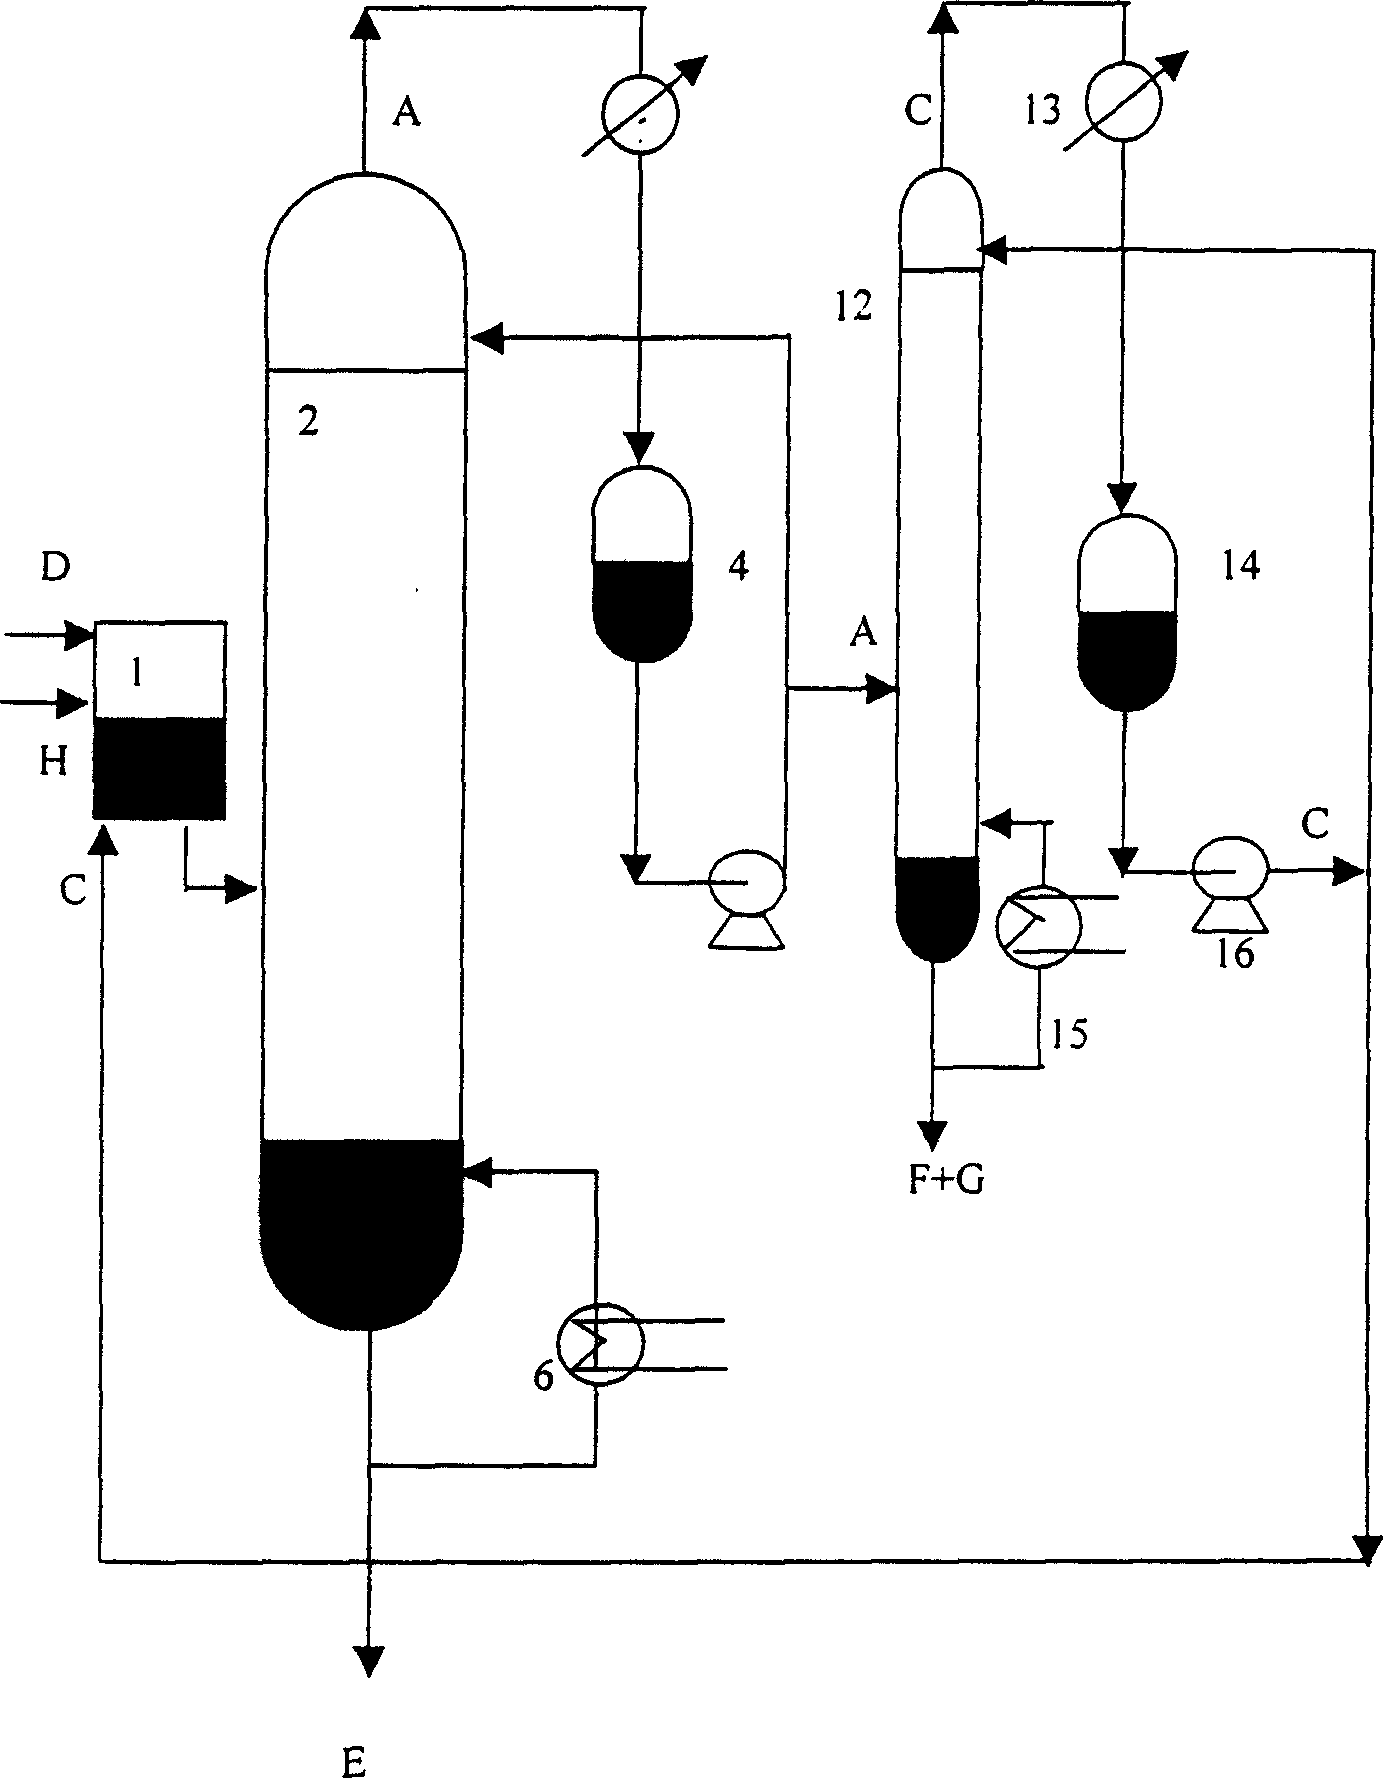 Production process for separating ethylbenzene and ortho-xylene from mixed xylene